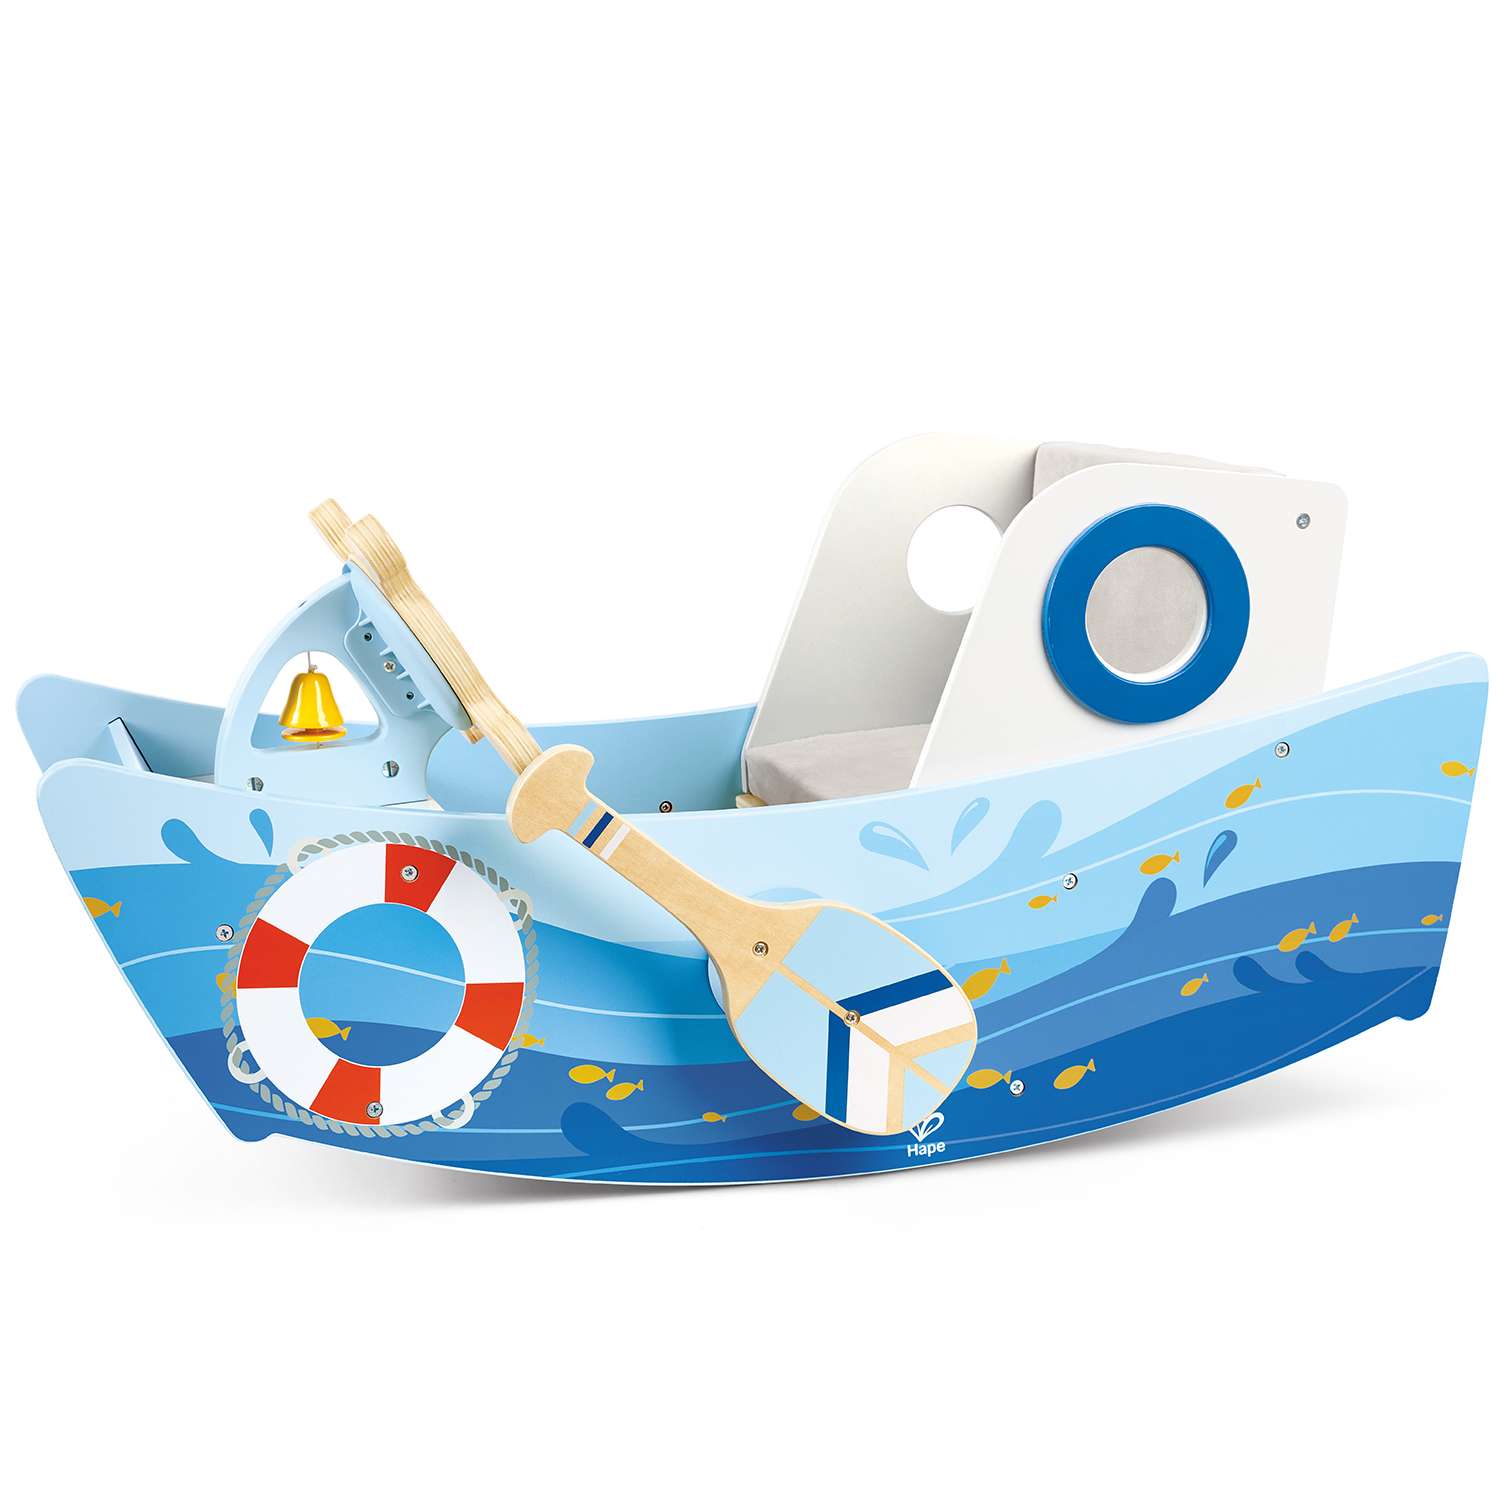 Детская качалка Hape Открытое море серия качалка-лодка - фото 2